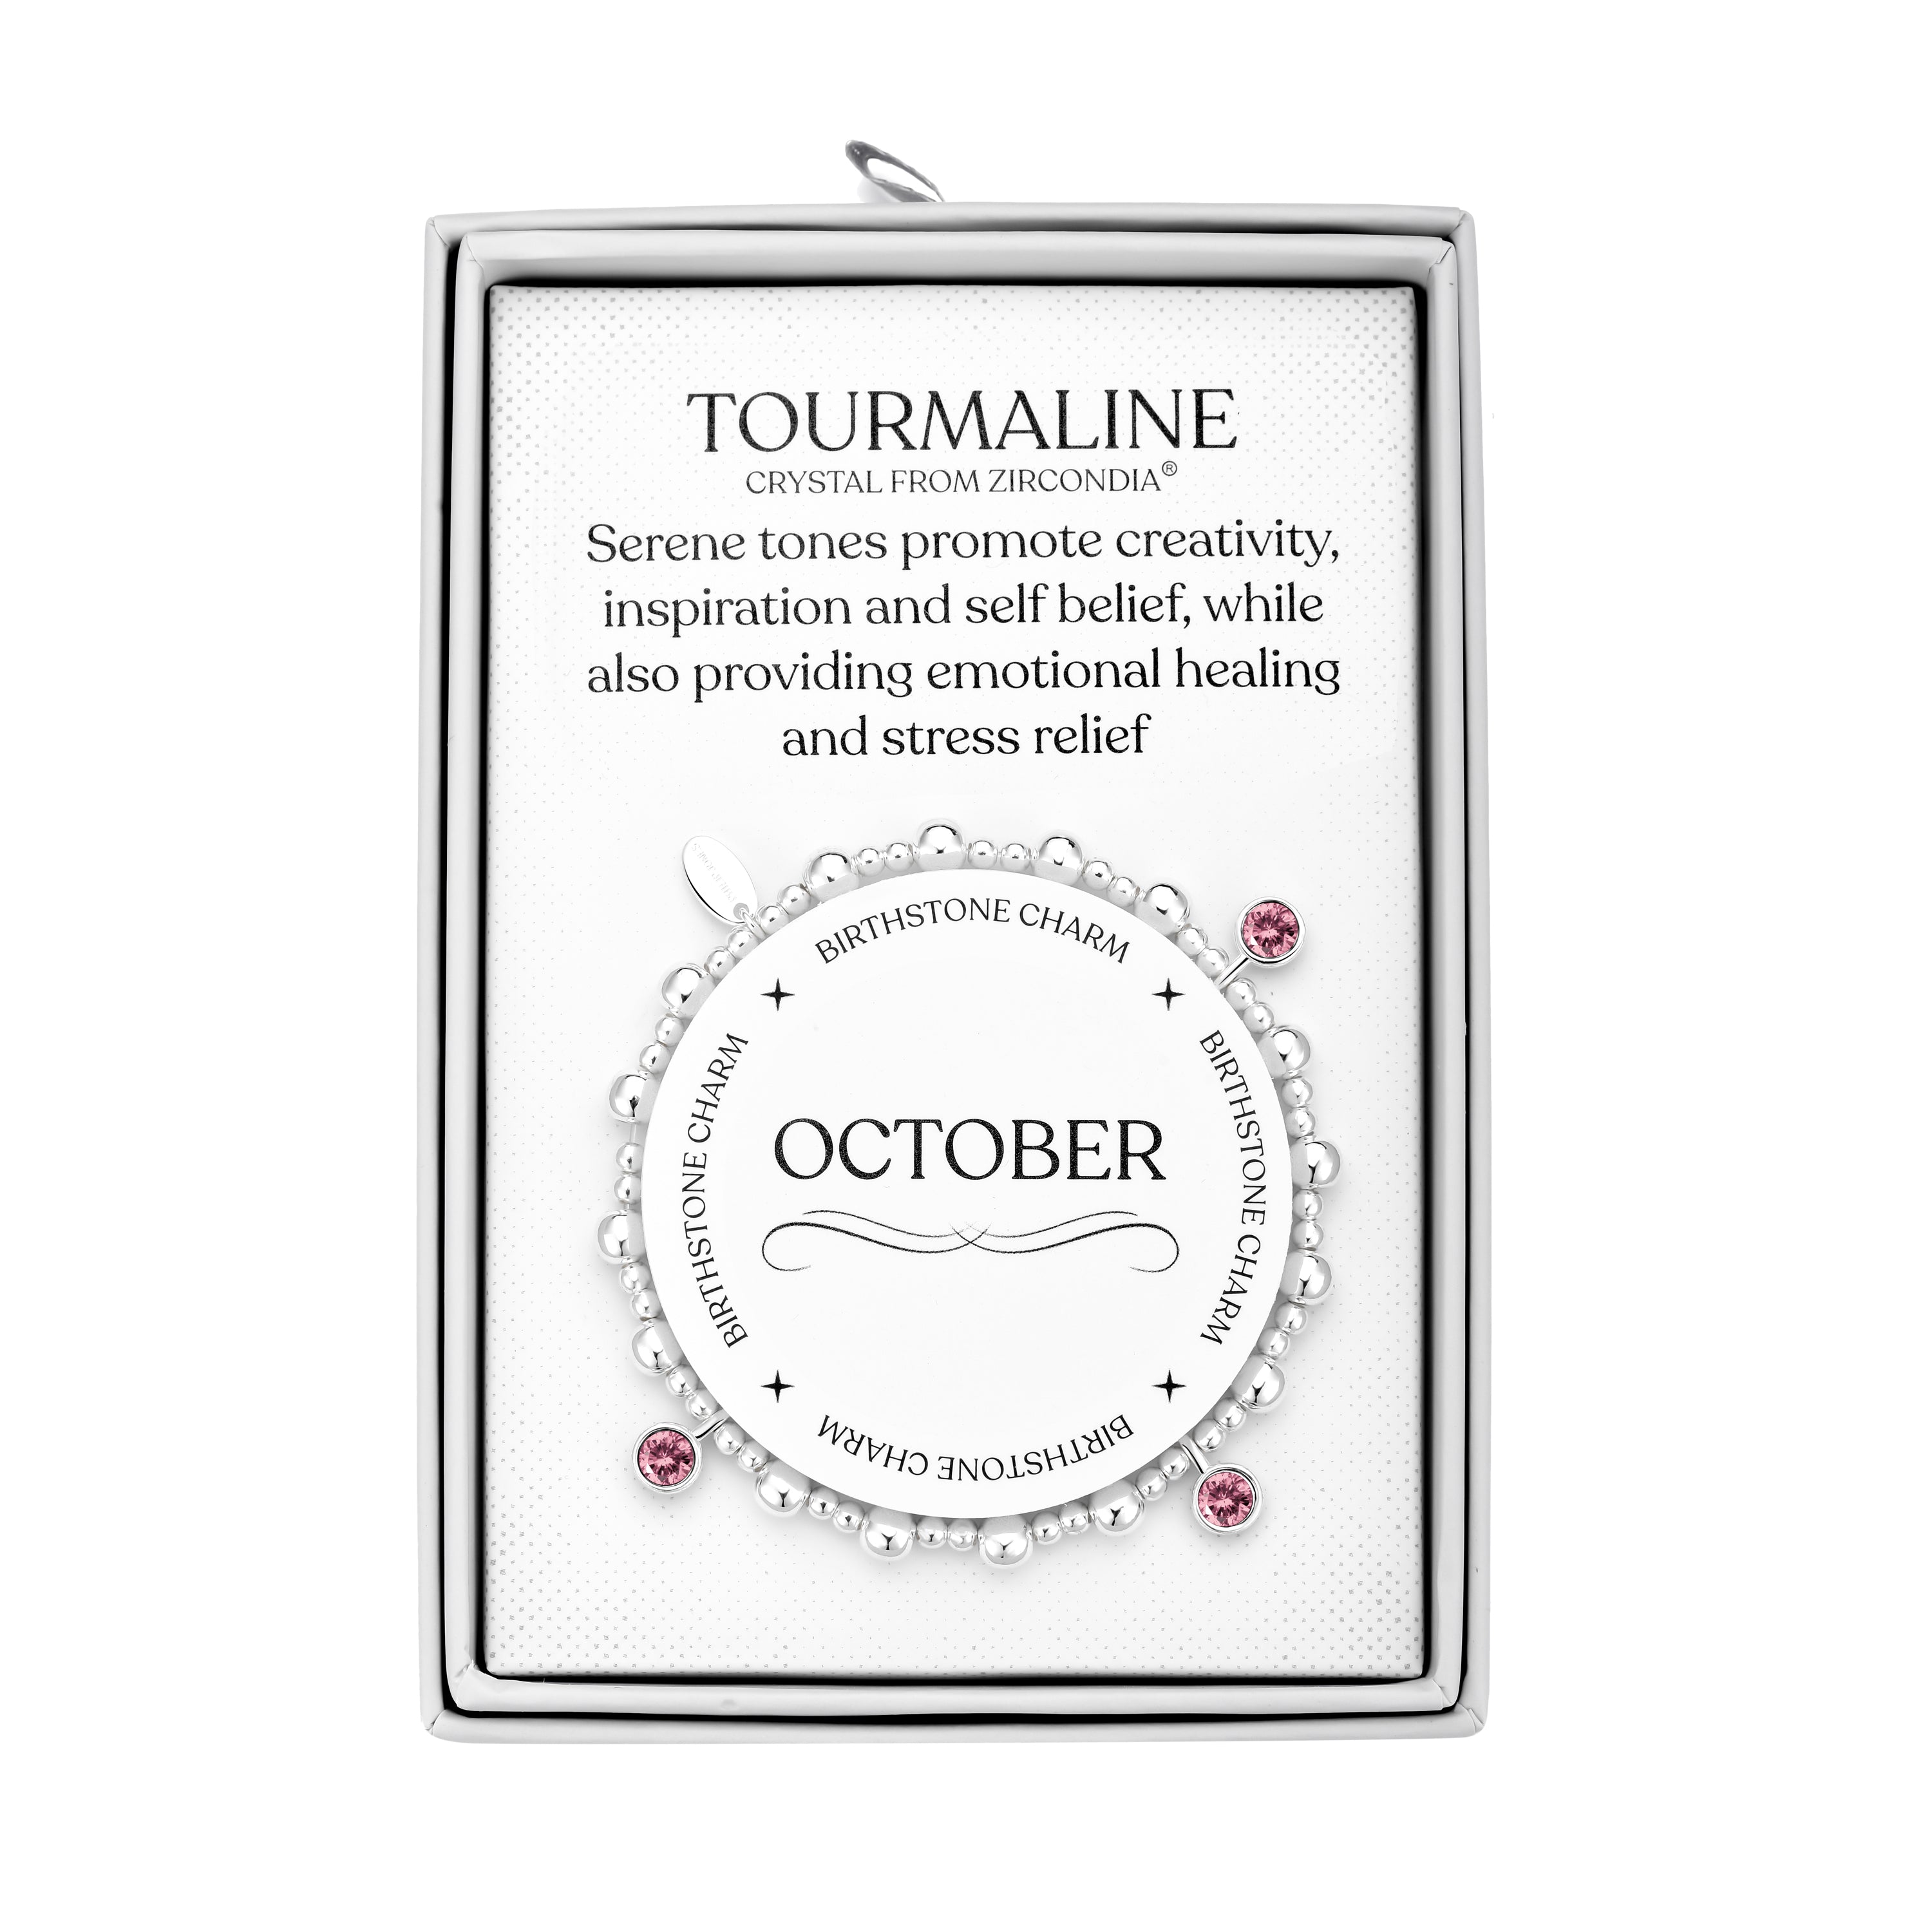 October (Tourmaline) Birthstone Stretch Charm Bracelet with Quote Gift Box by Philip Jones Jewellery